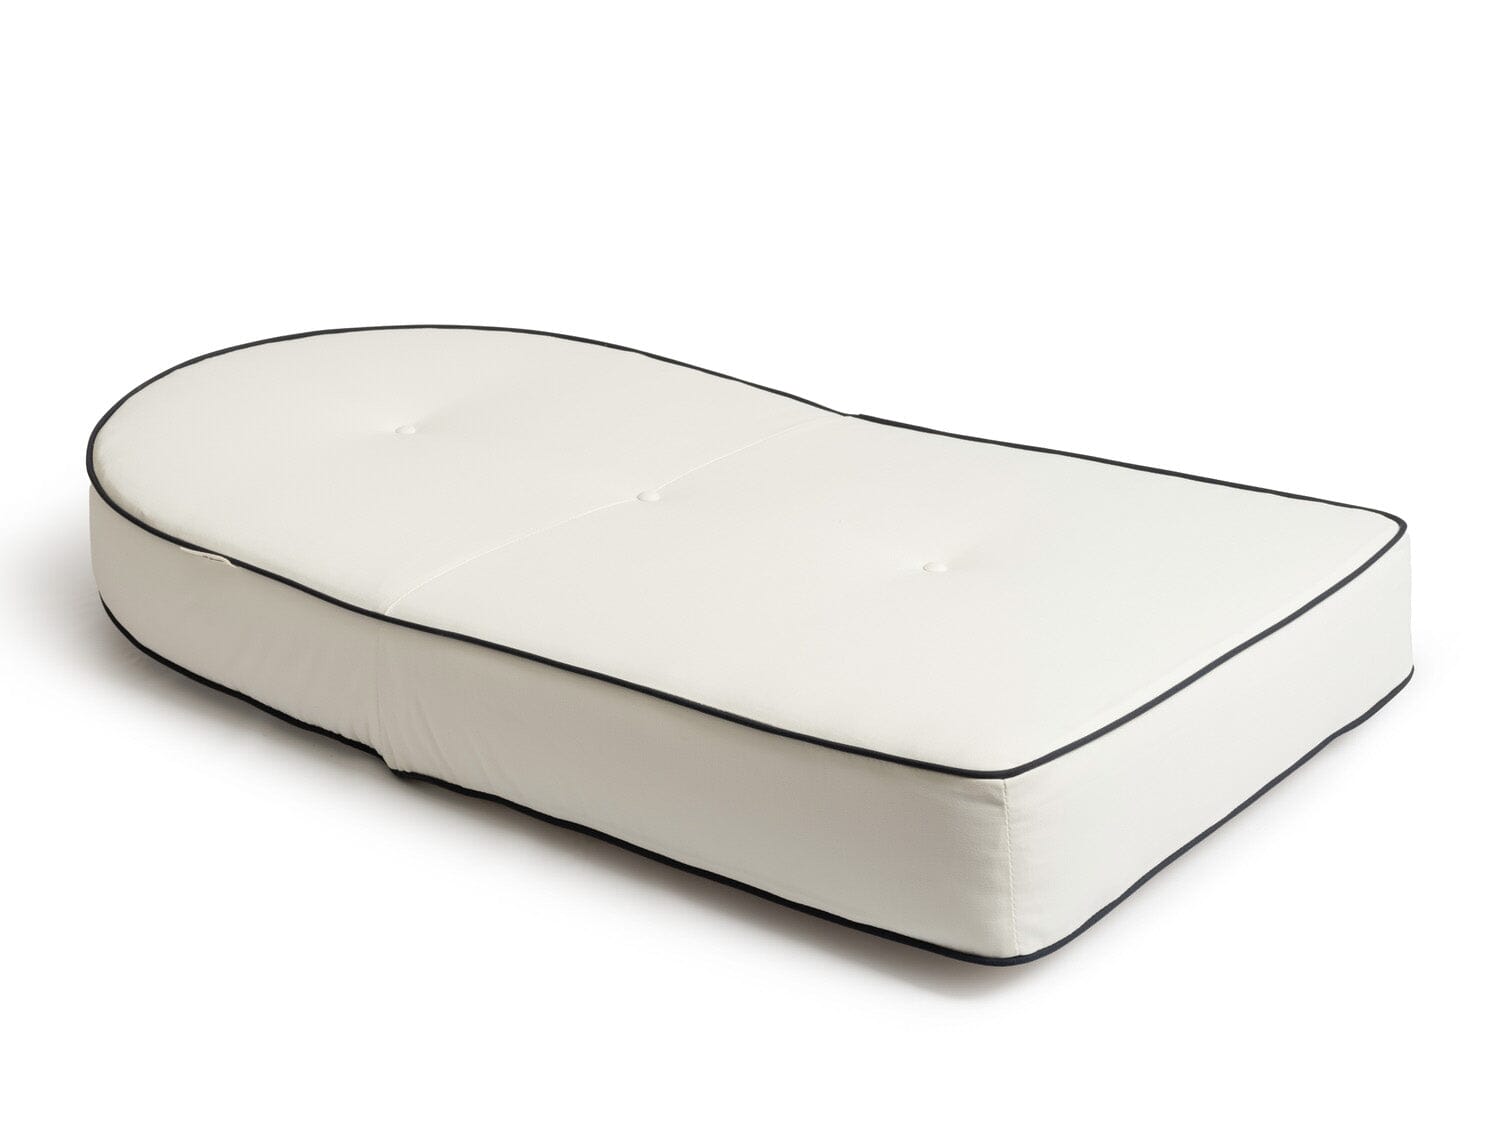 studio image of white reclining pillow lounger